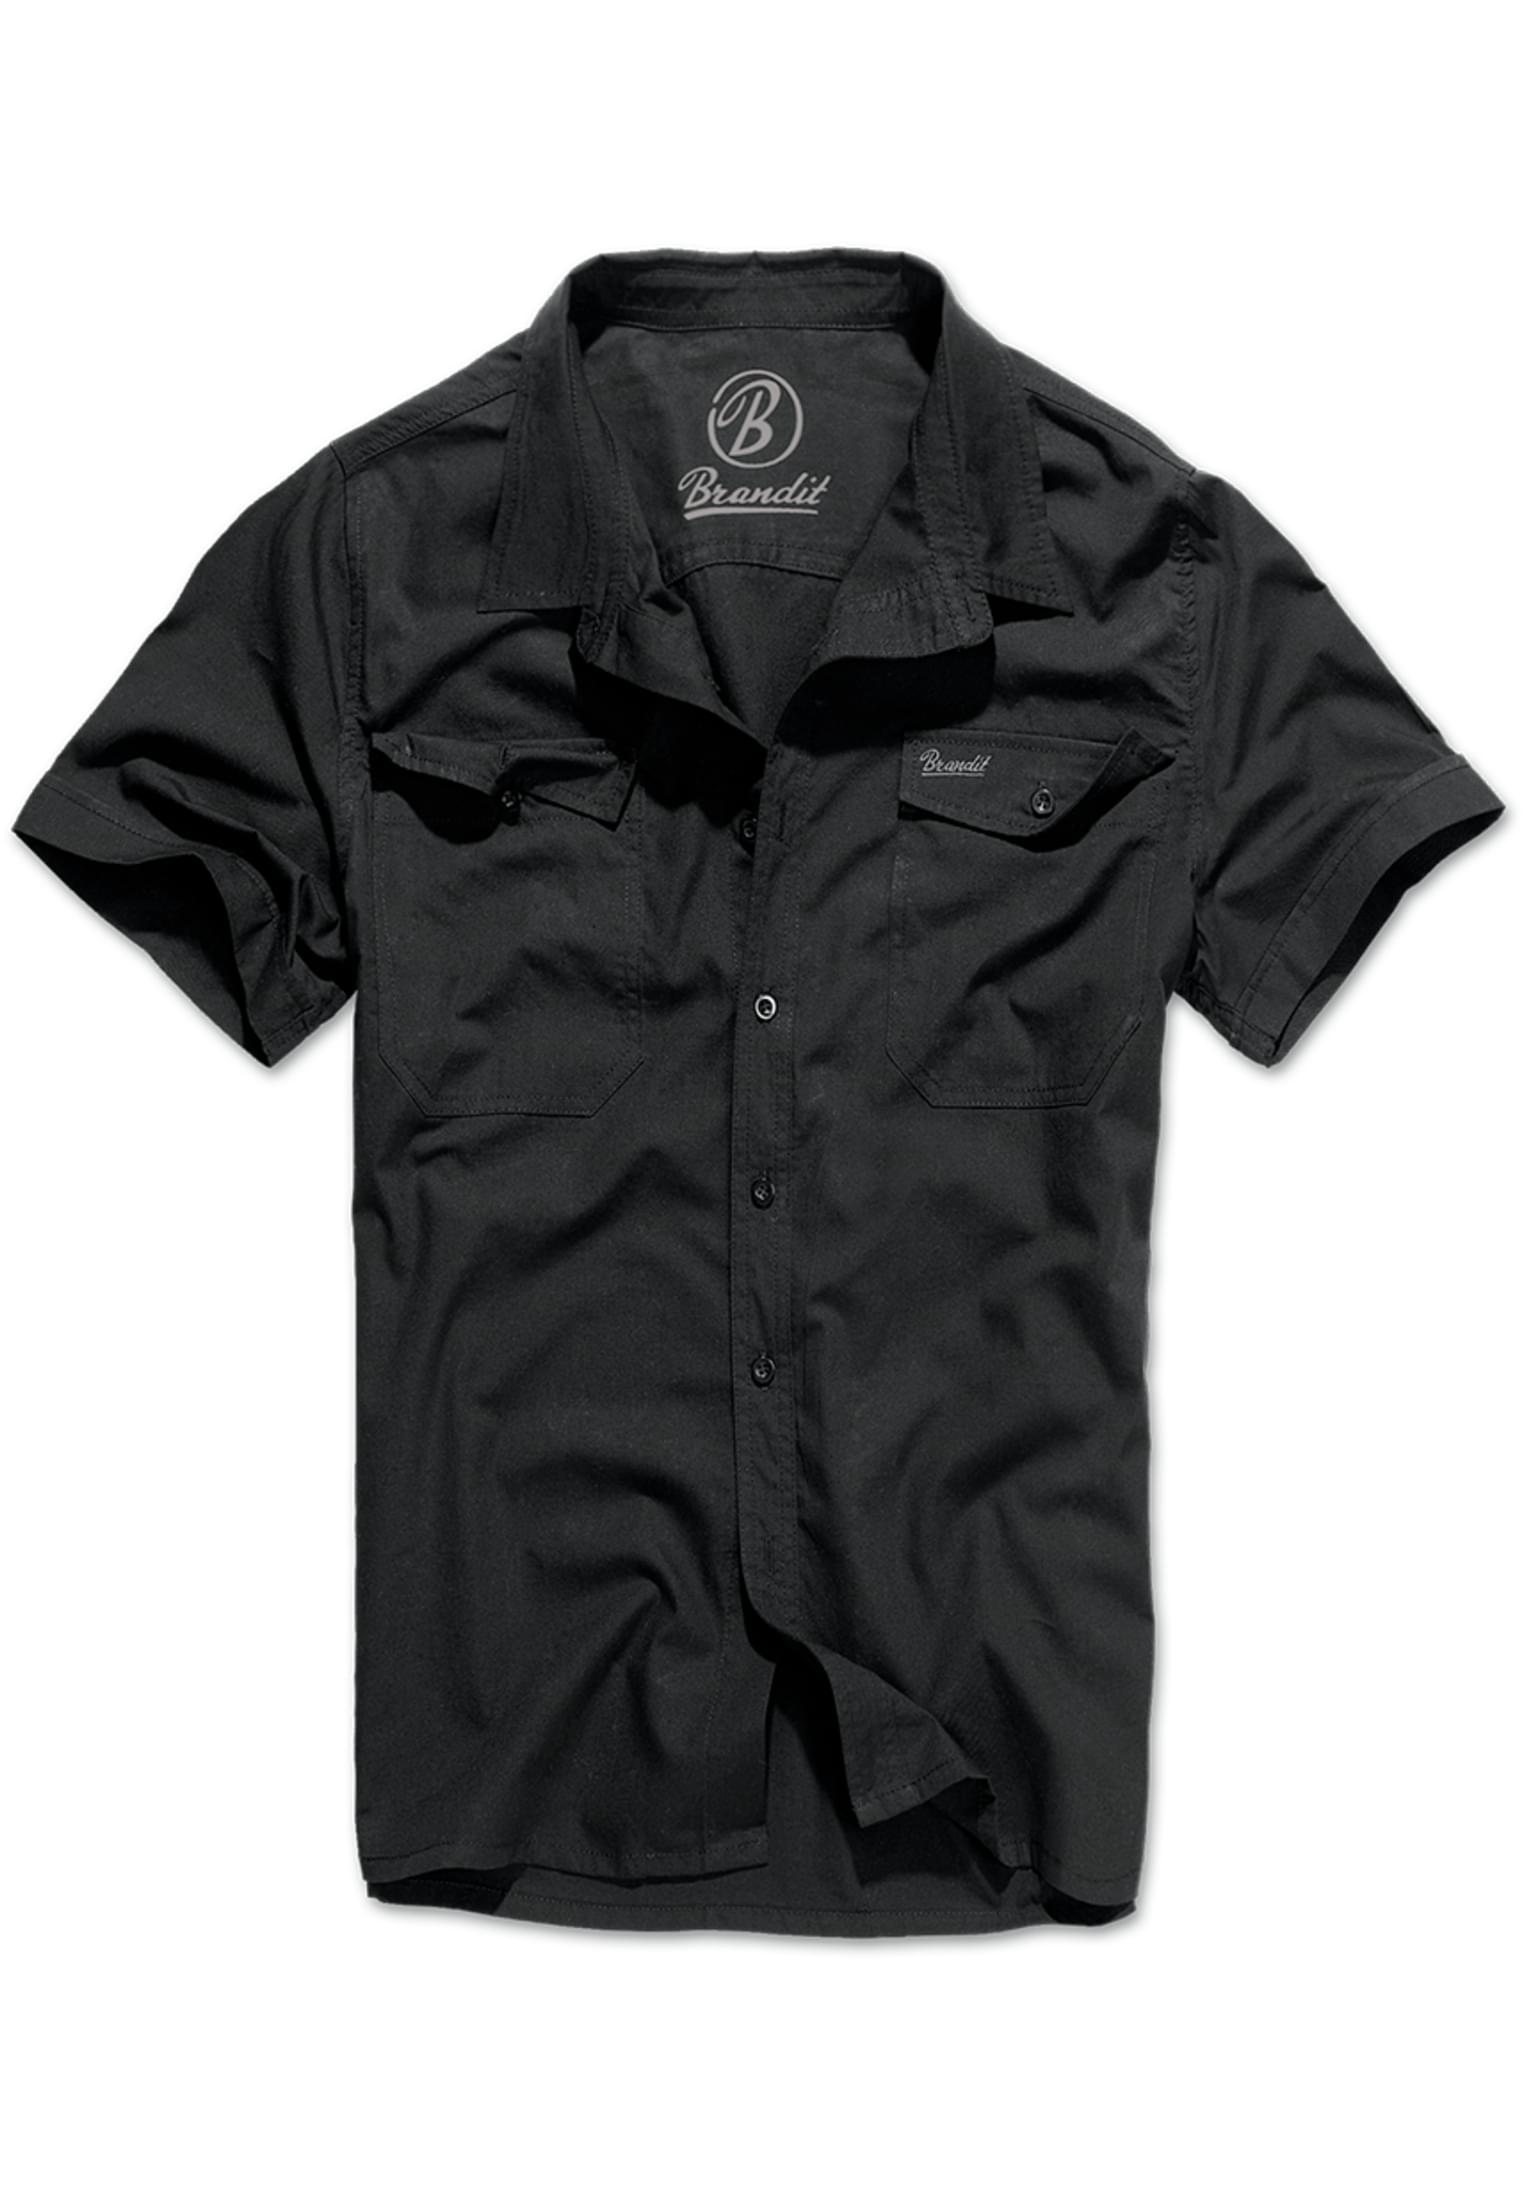 Hemden Roadstar Shirt in Farbe black